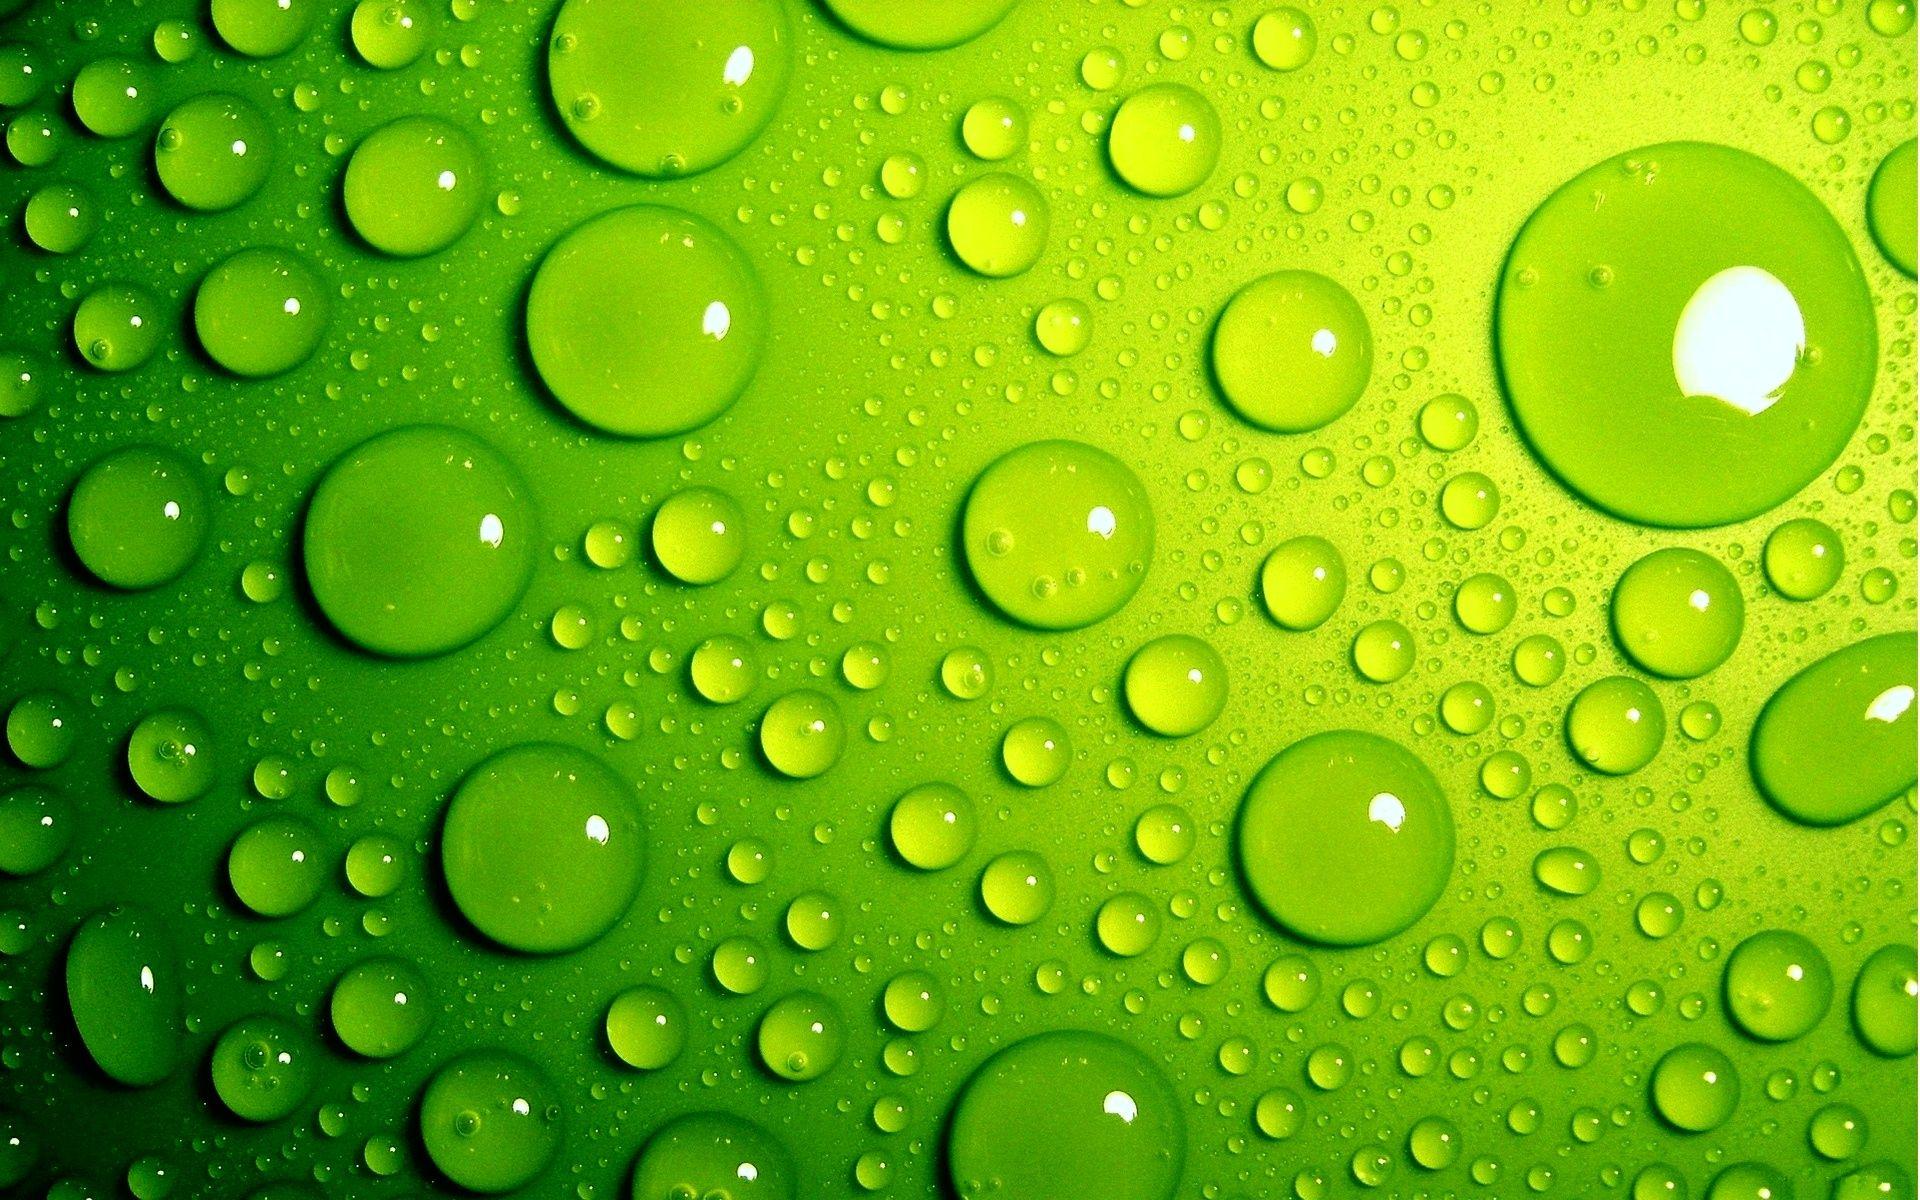 3D & Abstract Green Bubbles wallpaper Desktop, Phone, Tablet